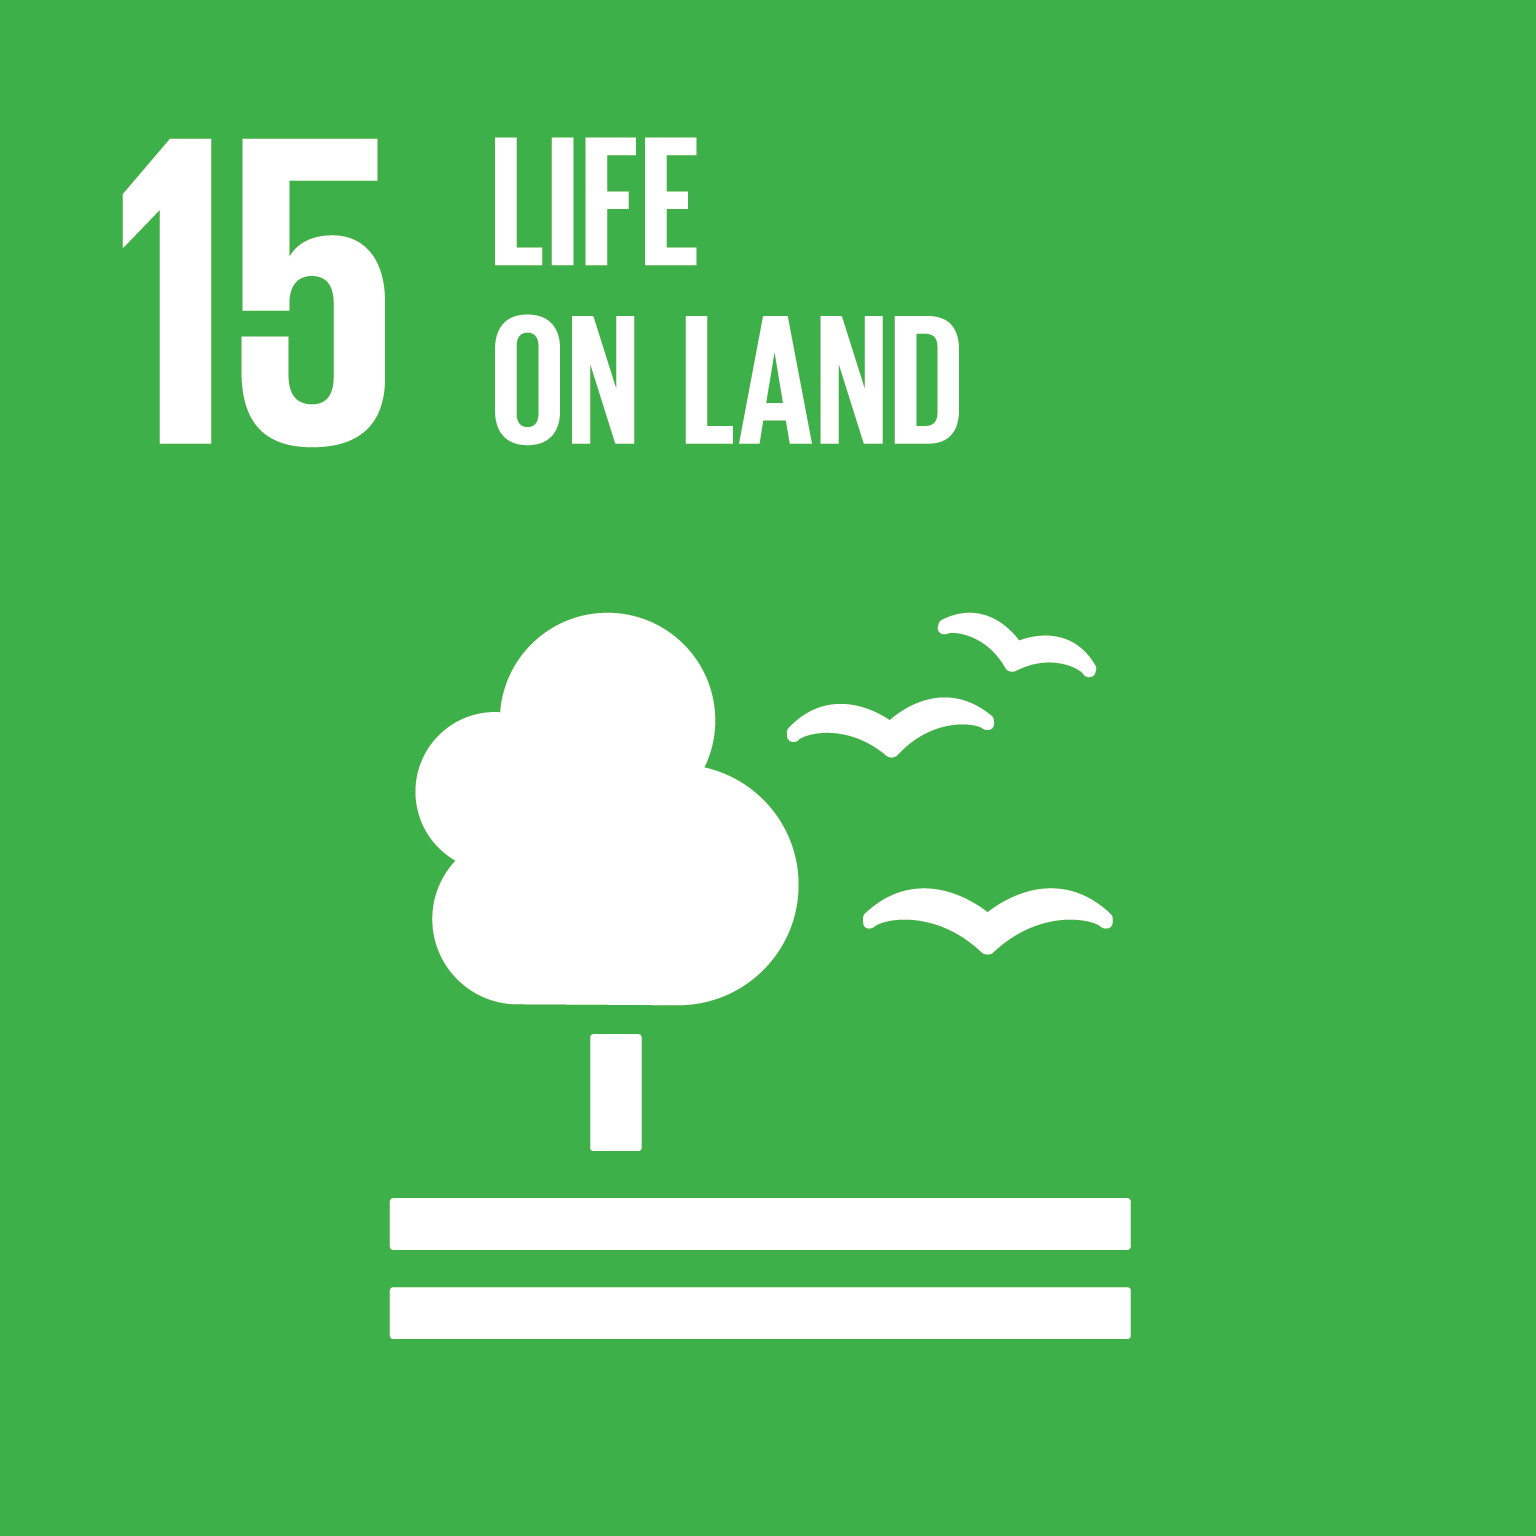 Sustainable development goals : Life on land